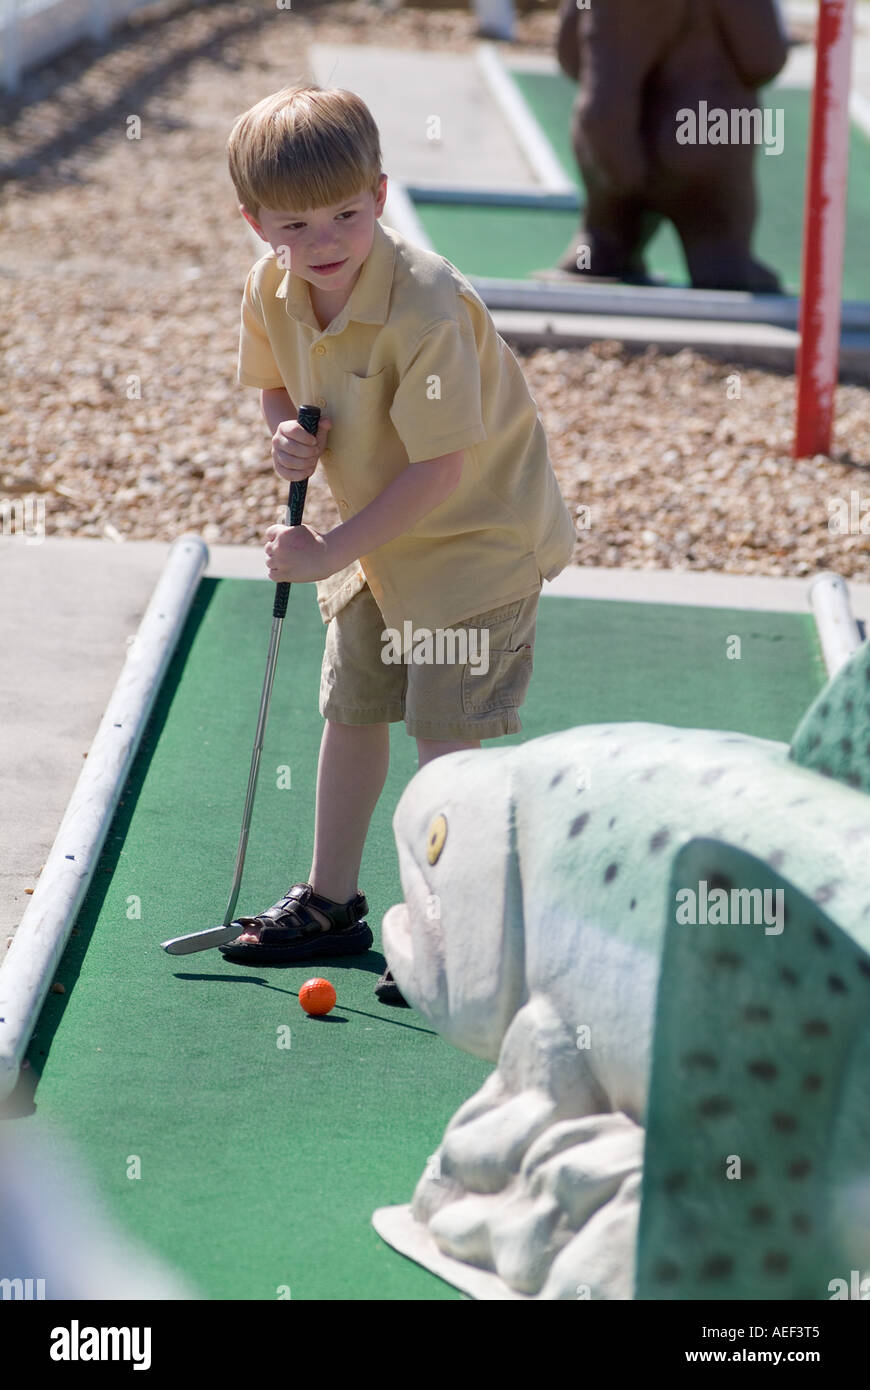 boy playing miniature golf child children course coordination skills golfing Stock Photo